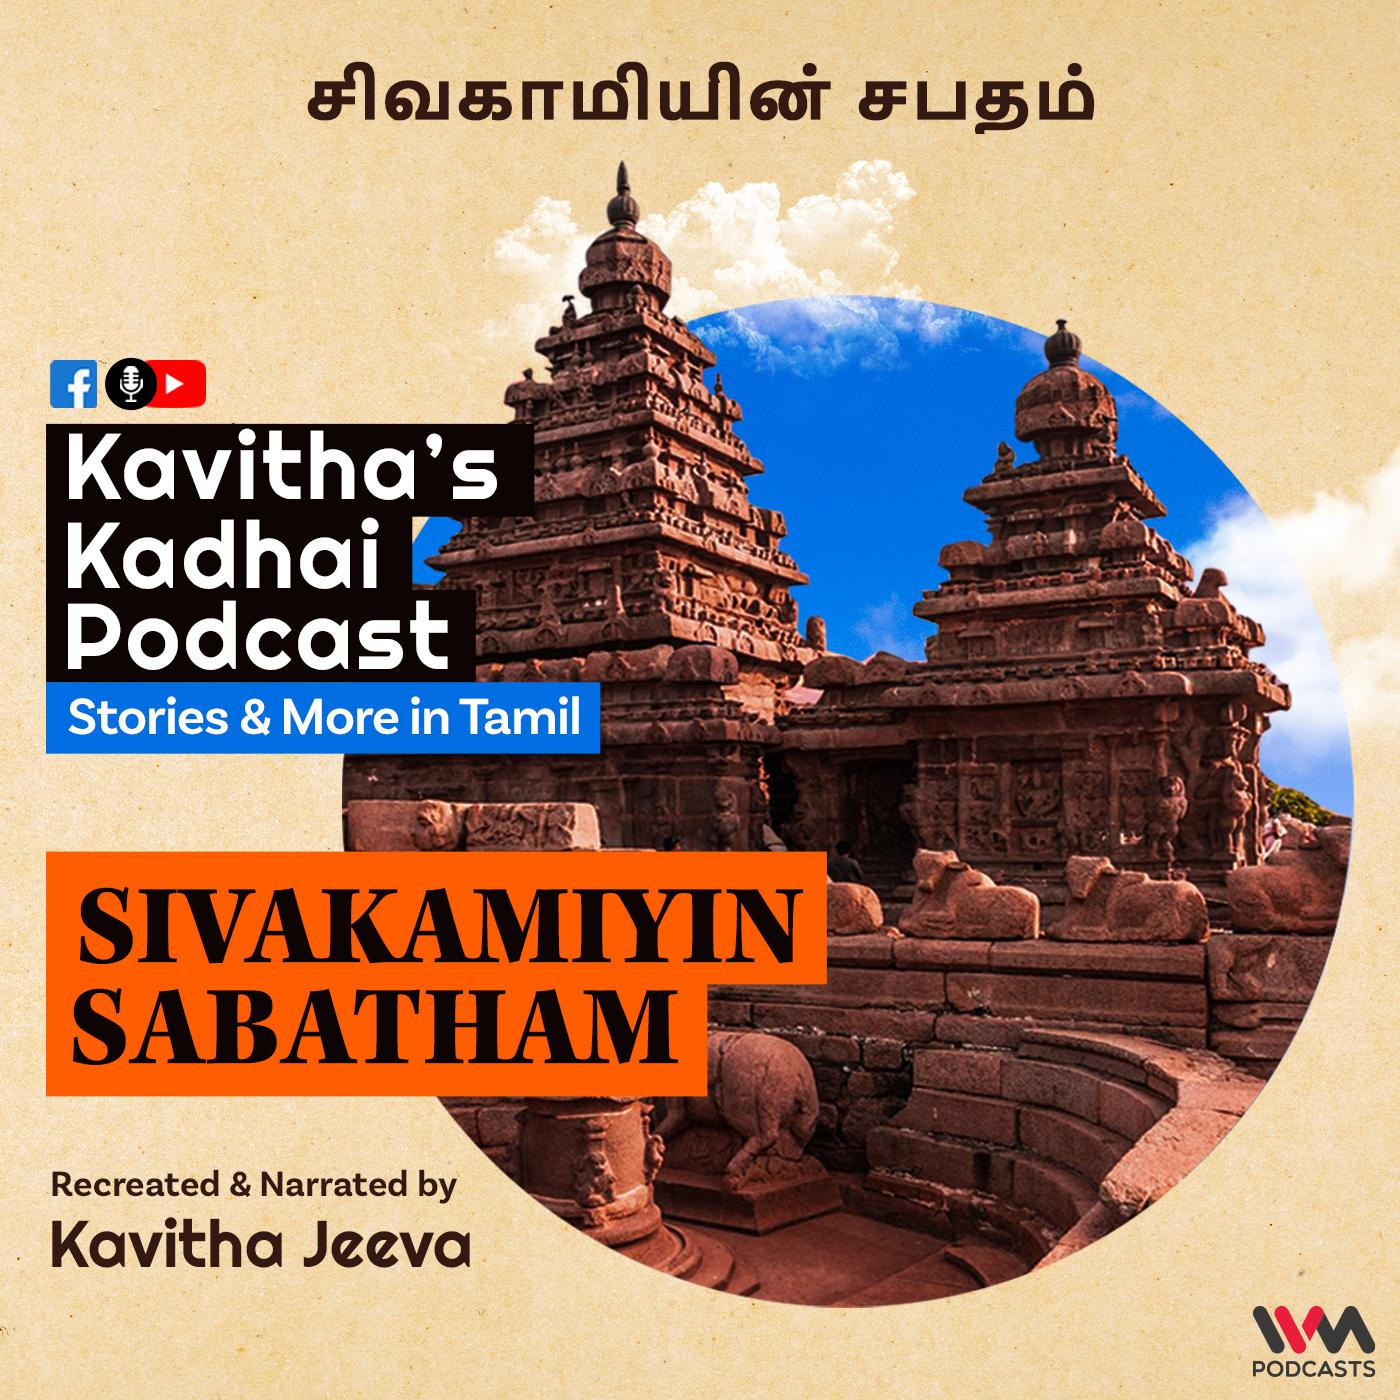 KadhaiPodcast's Sivakamiyin Sabatham with Kavitha Jeeva - Episode #104